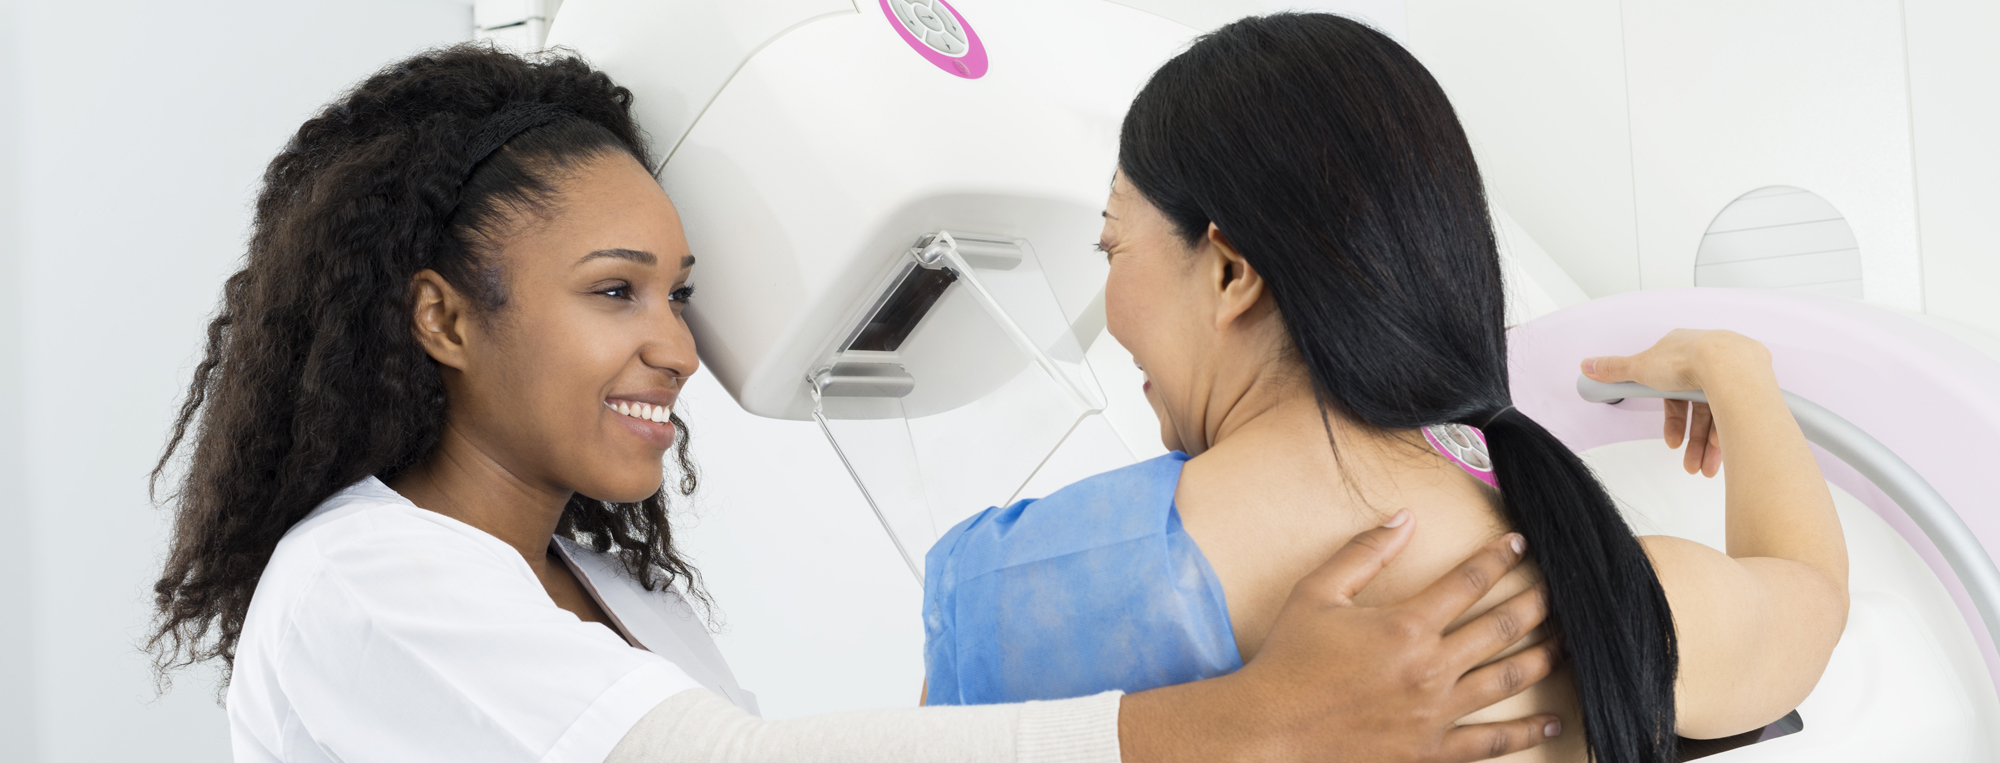 Female doctor giving patient mammogram